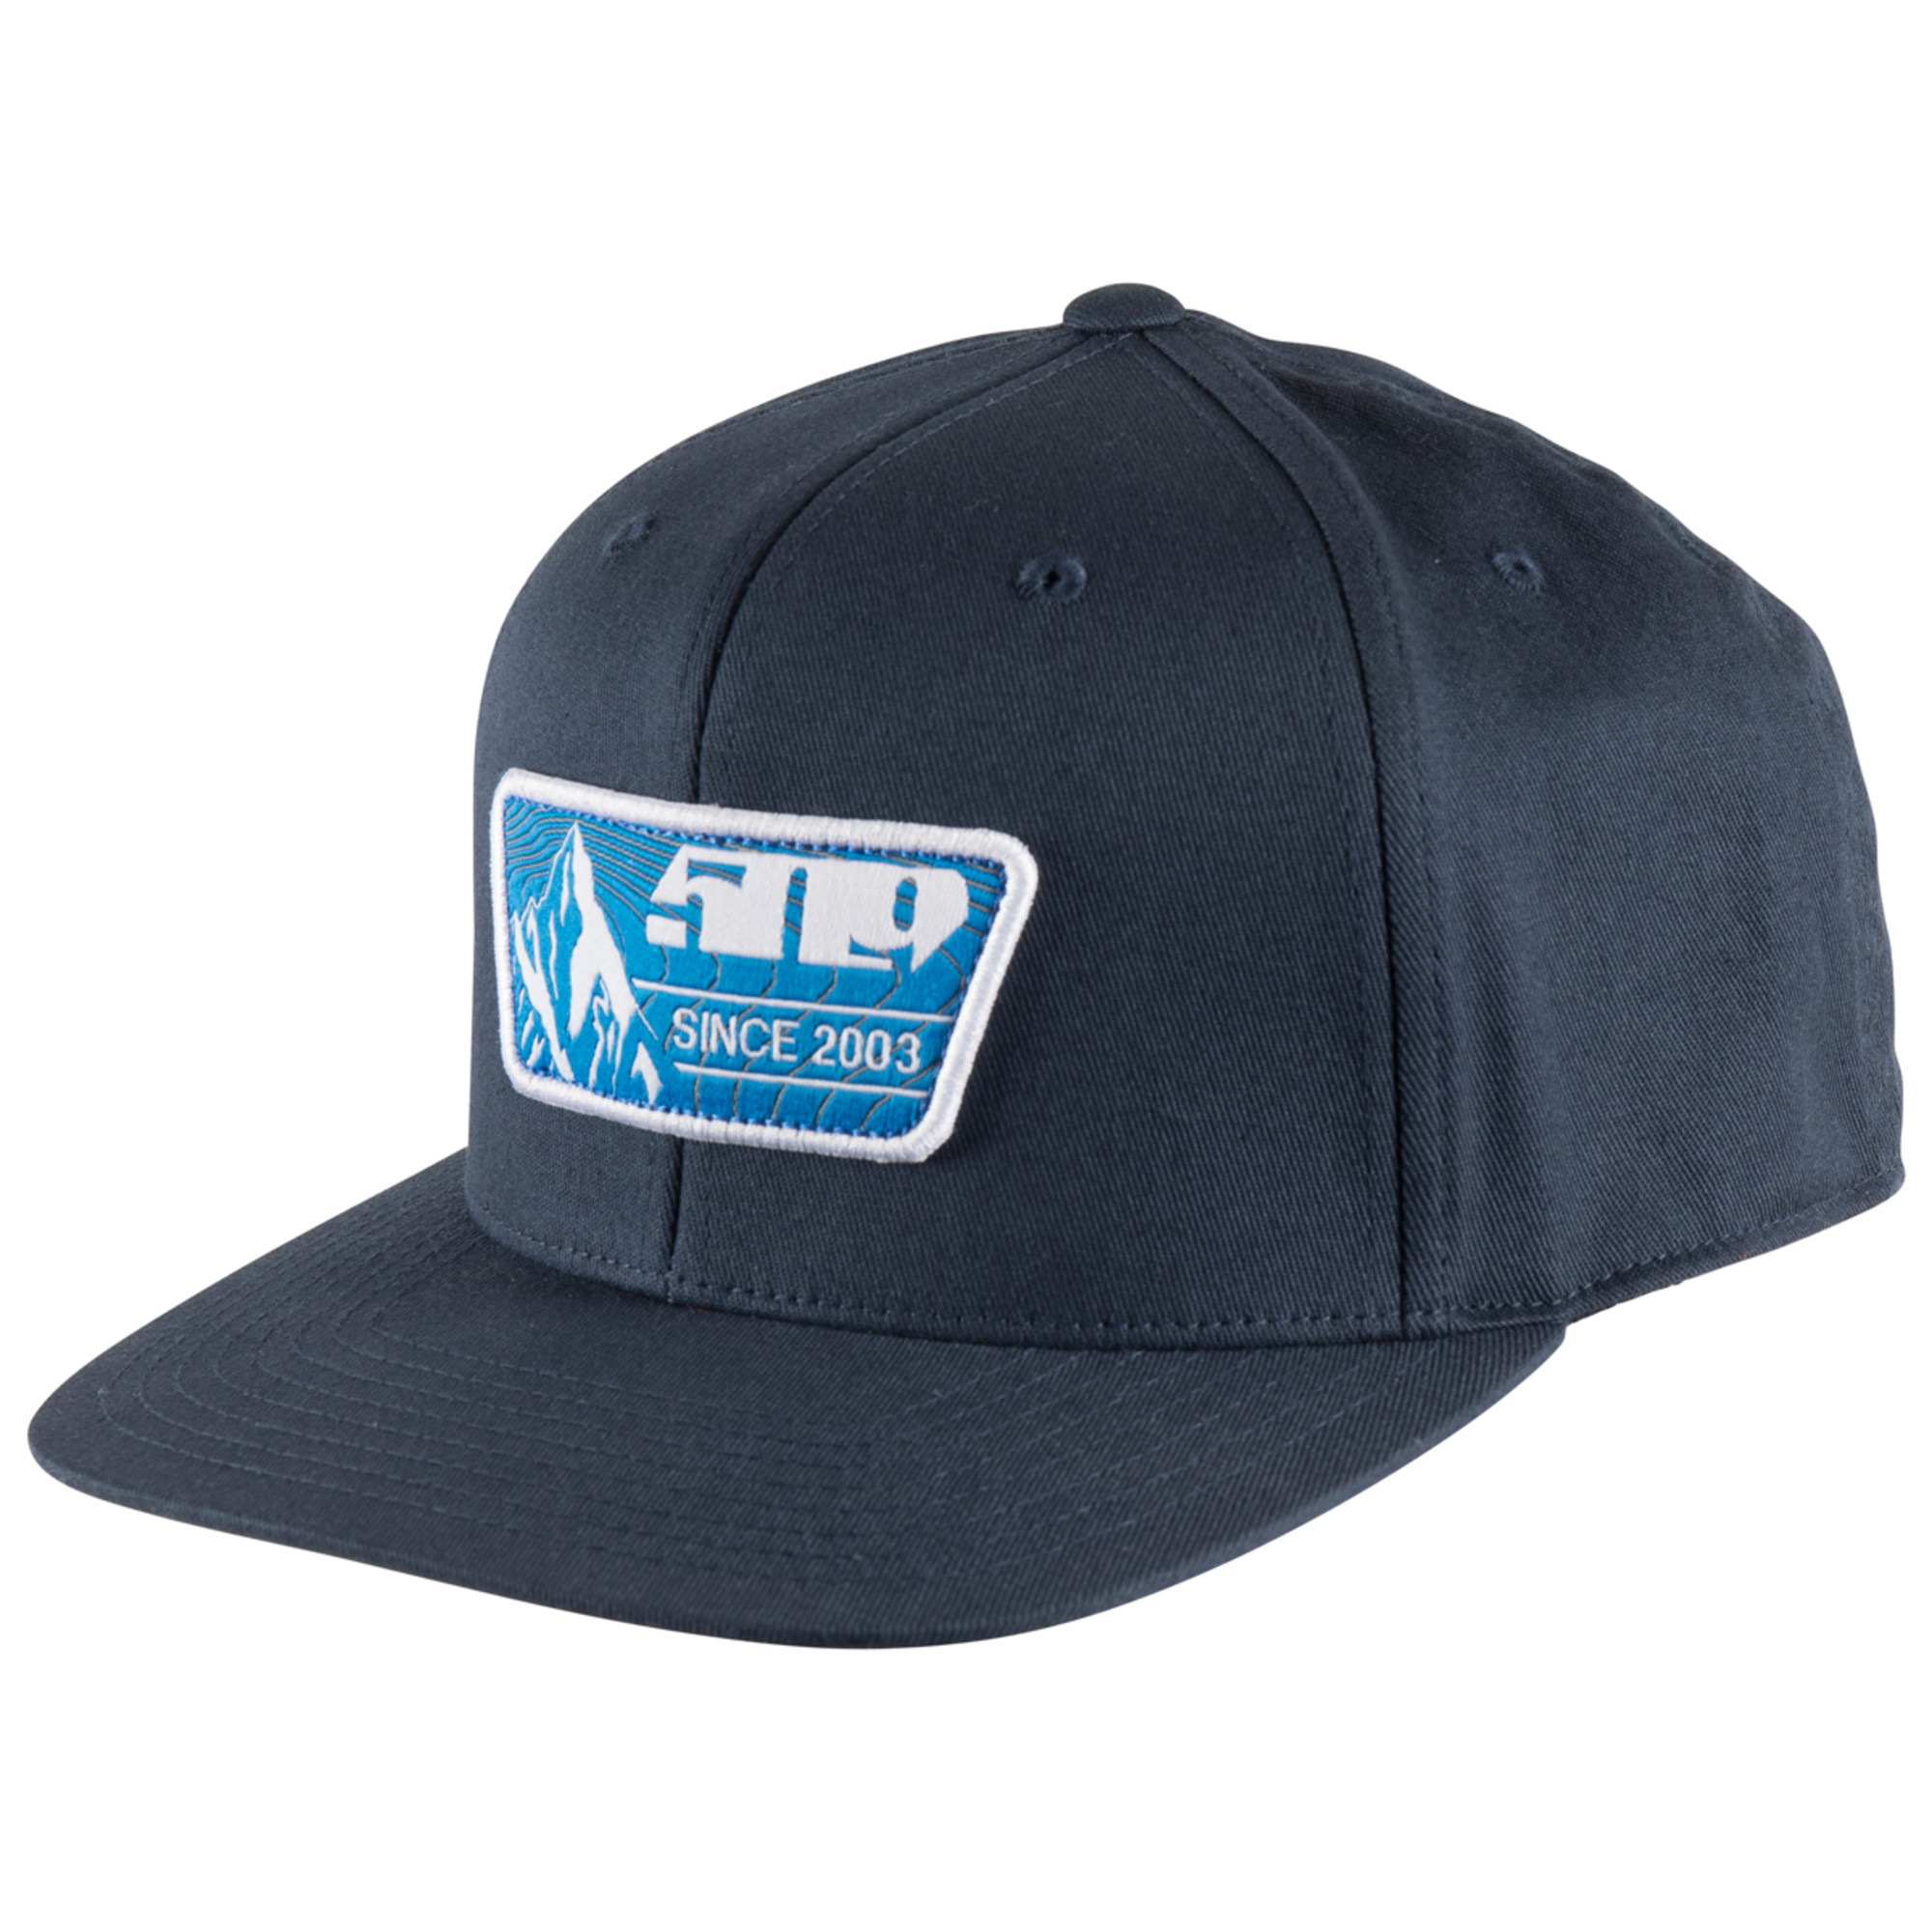 509 snapback hats for men blue prints